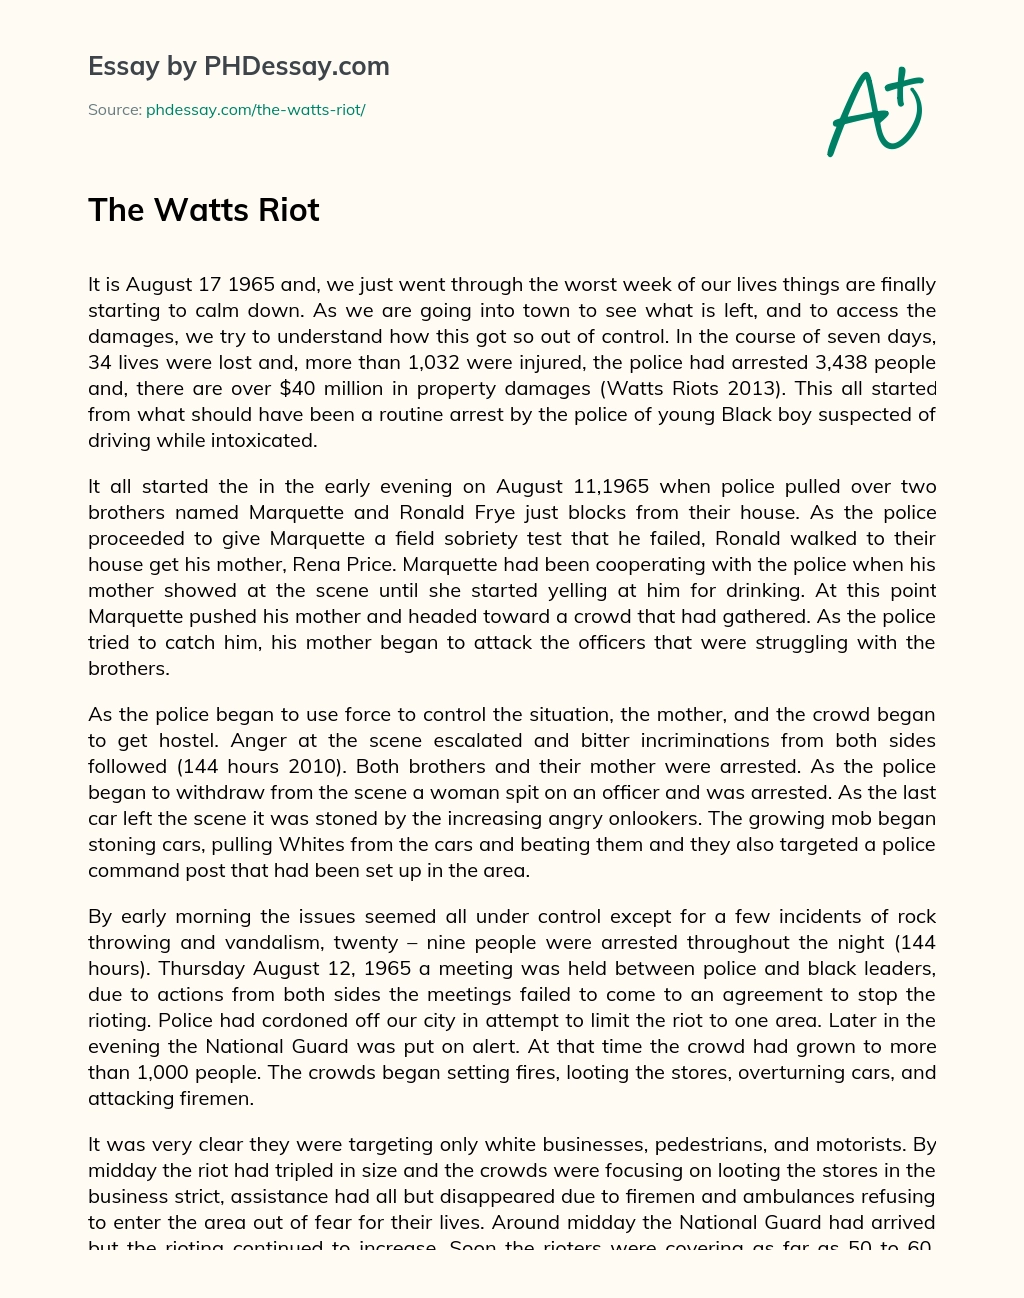 The Watts Riot essay